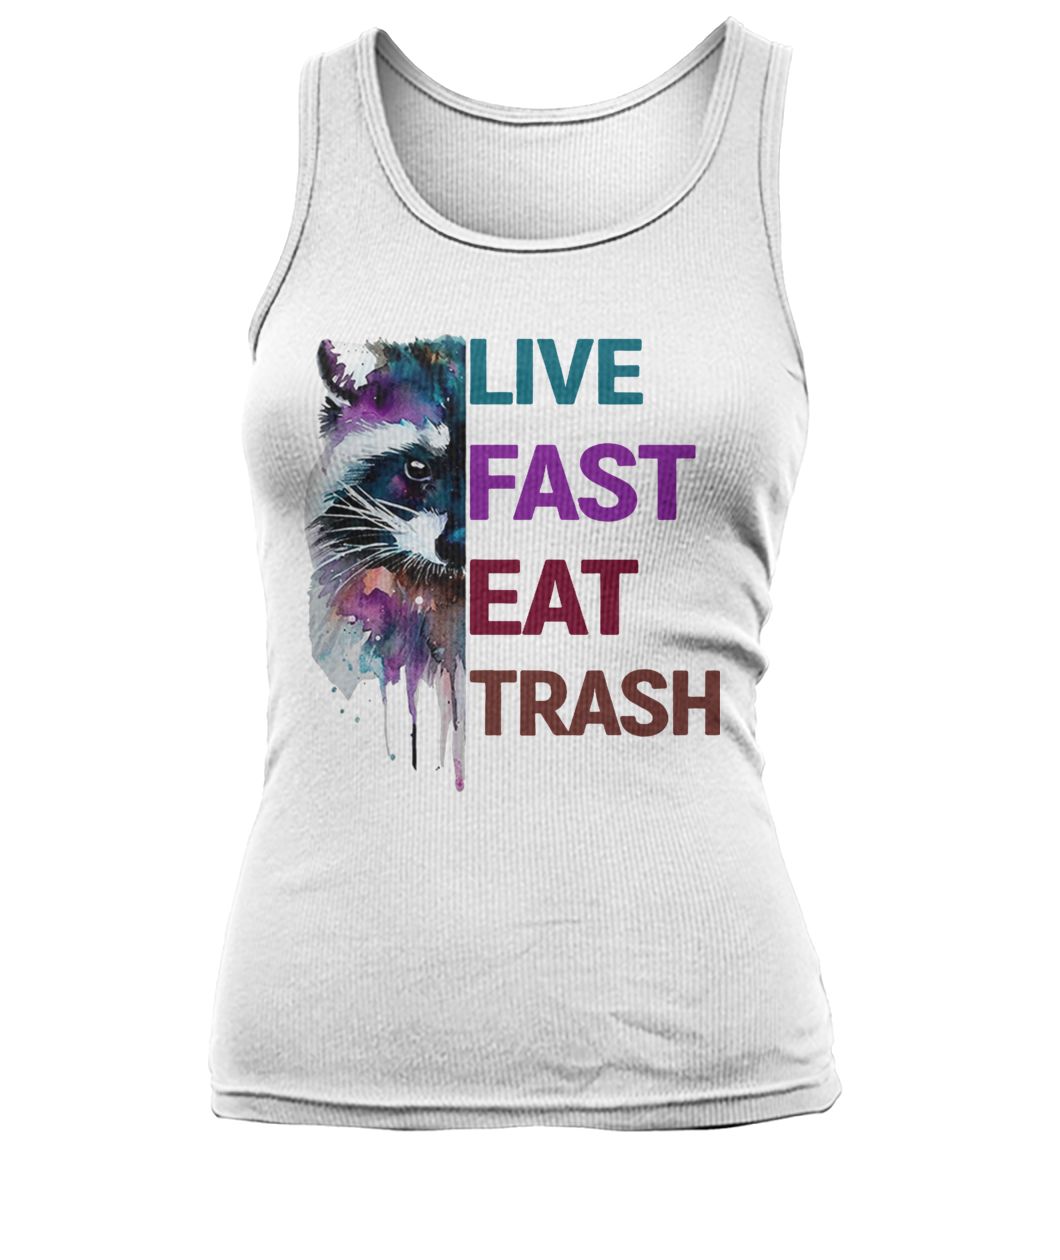 Raccoon live fast eat trash women's tank top